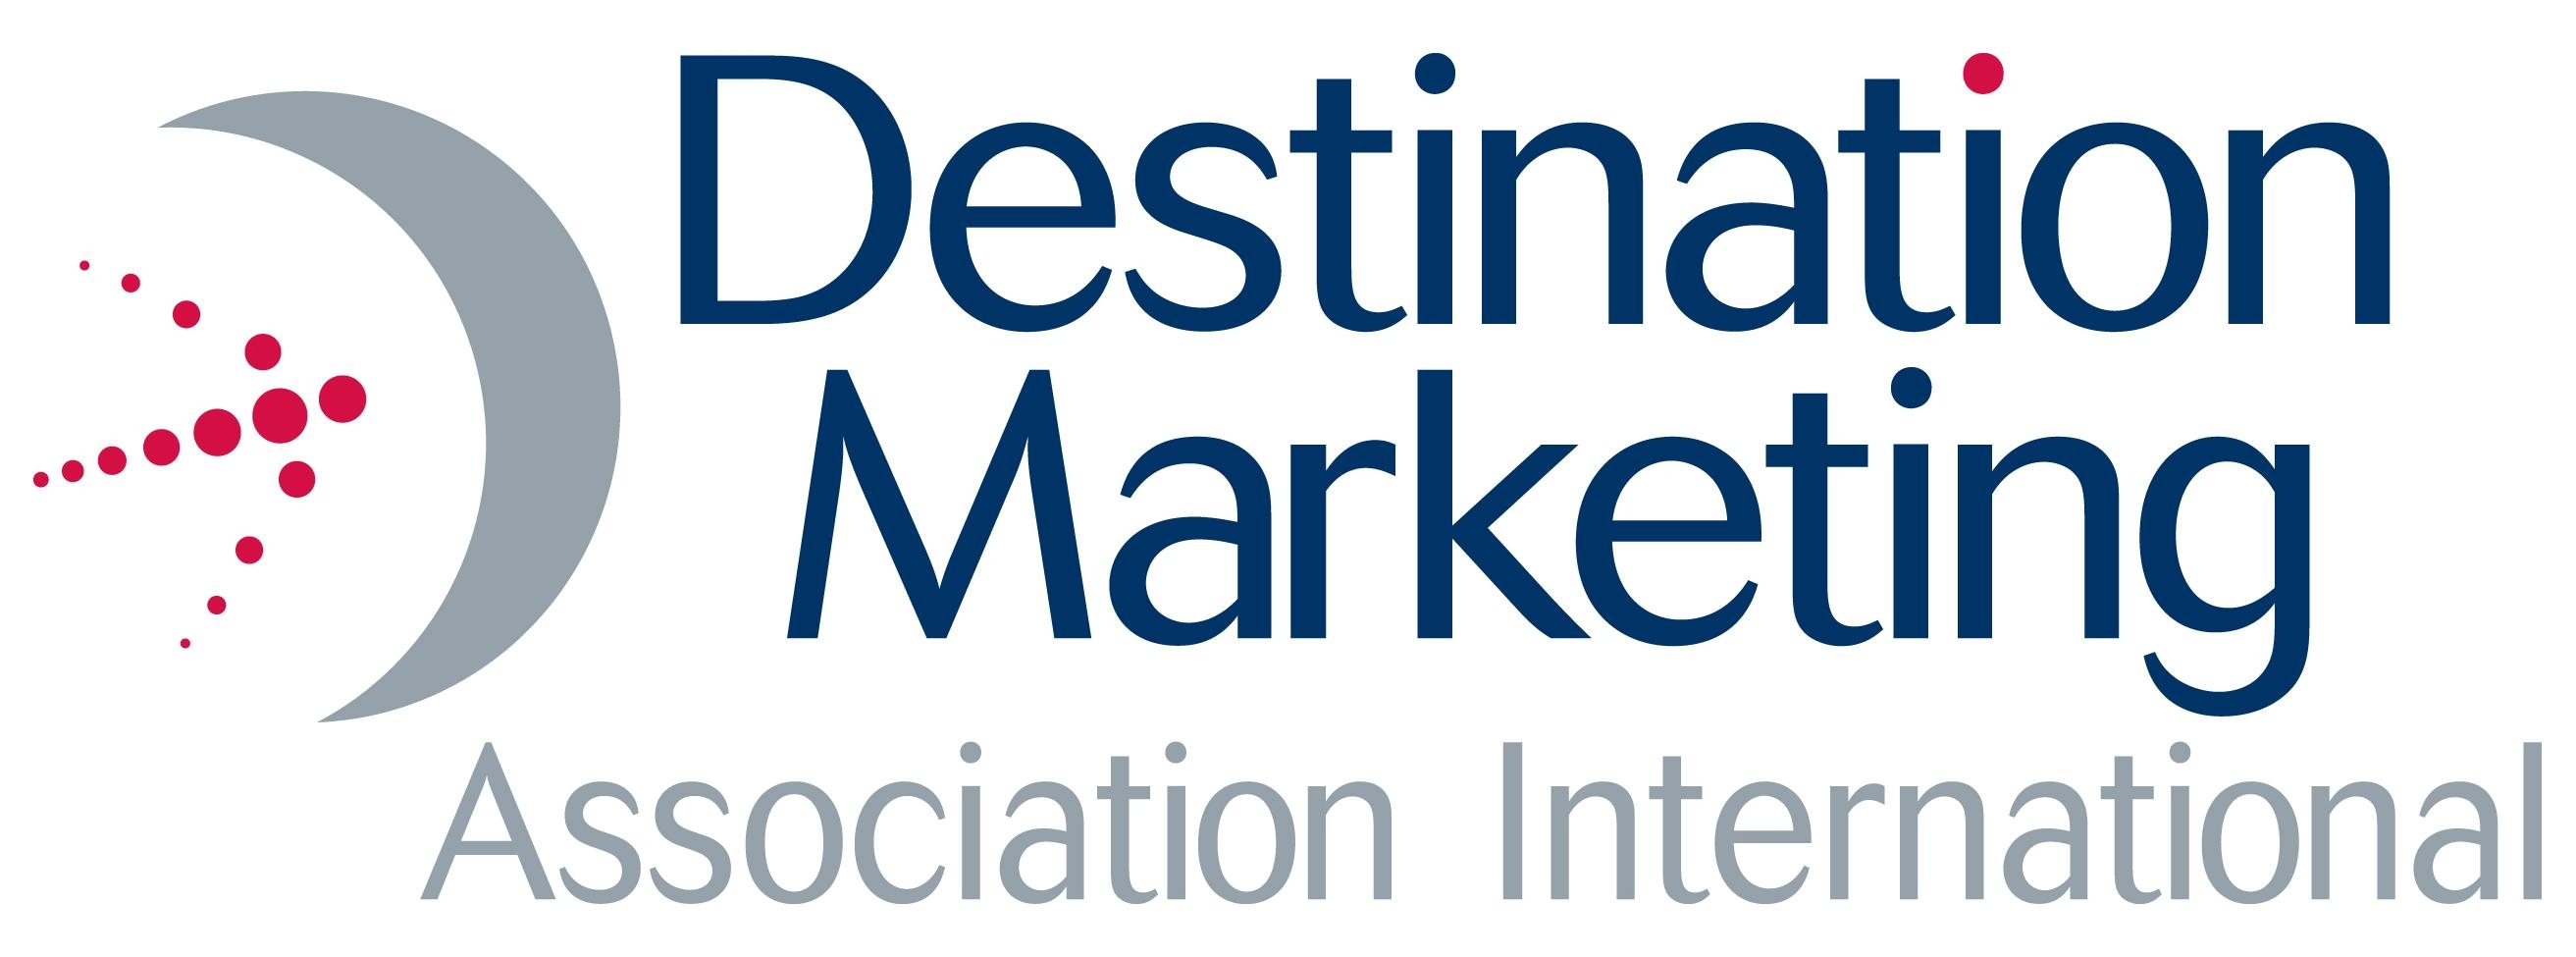 Destination Marketing Association International Convention 2017